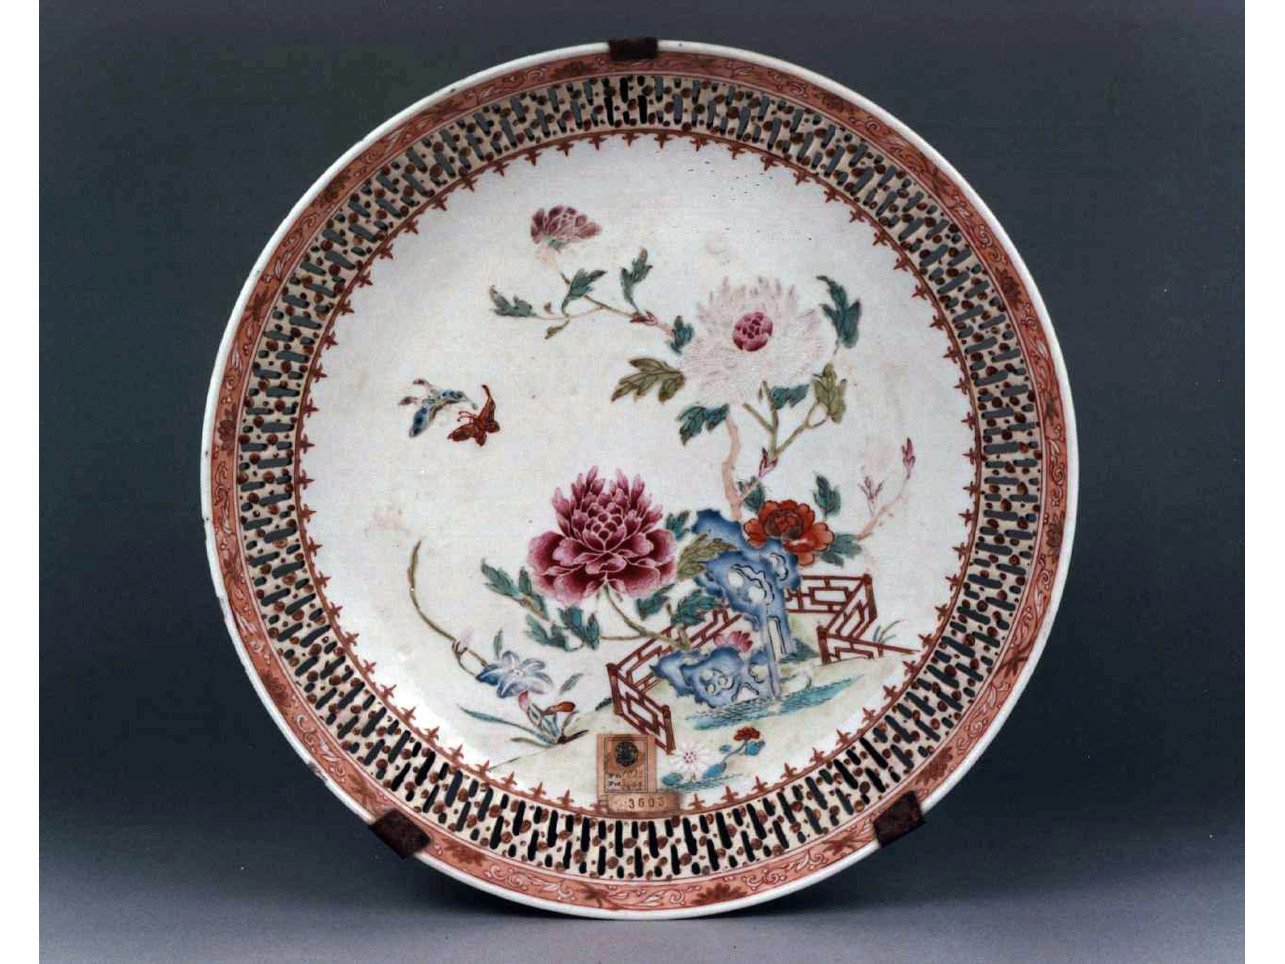 motivi decorativi vegetali (piatto) - manifattura cinese (sec. XVIII)